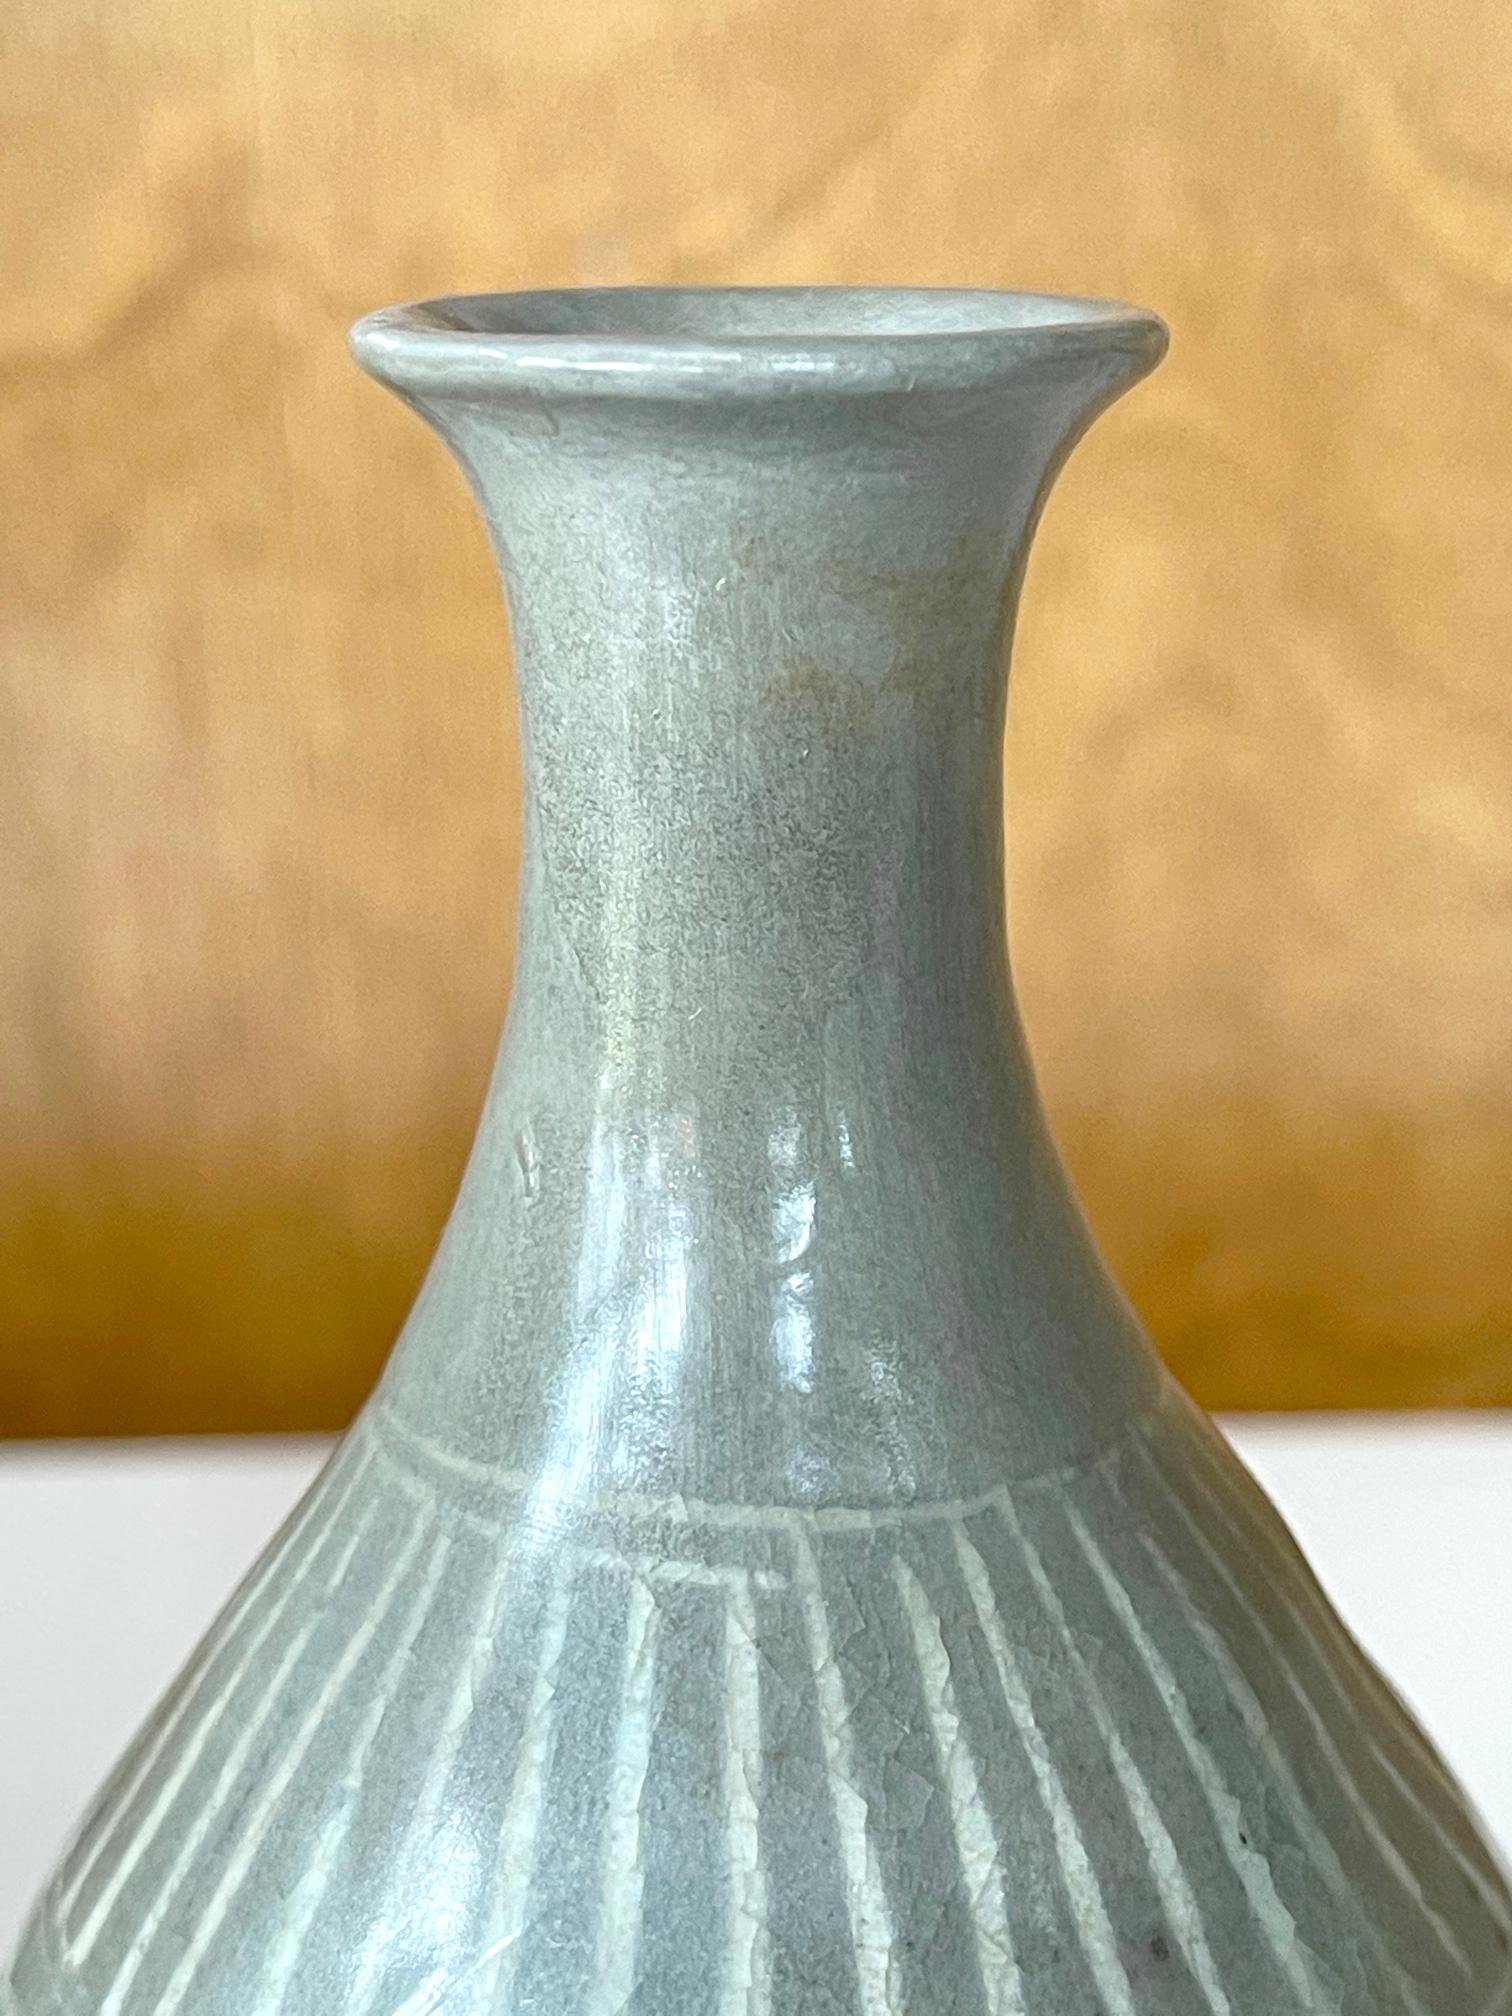 Korean Celadon Inlay Vase Goryeo Dynasty For Sale 4